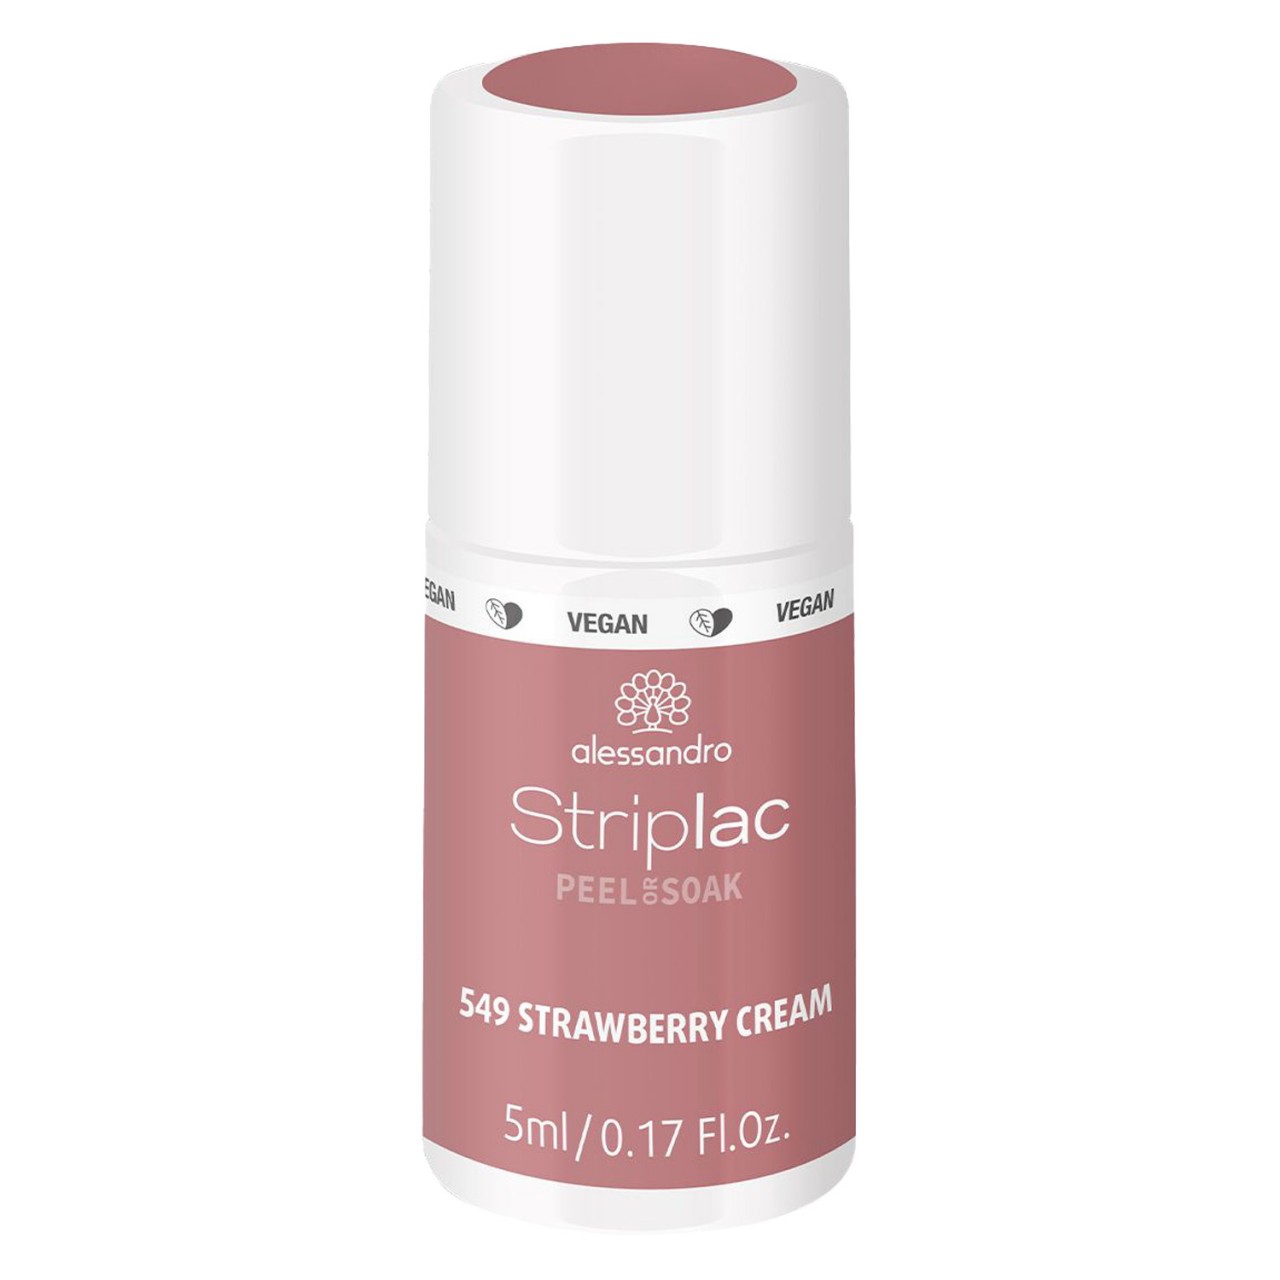 Striplac Peel or Soak - Strawberry Cream von Alessandro